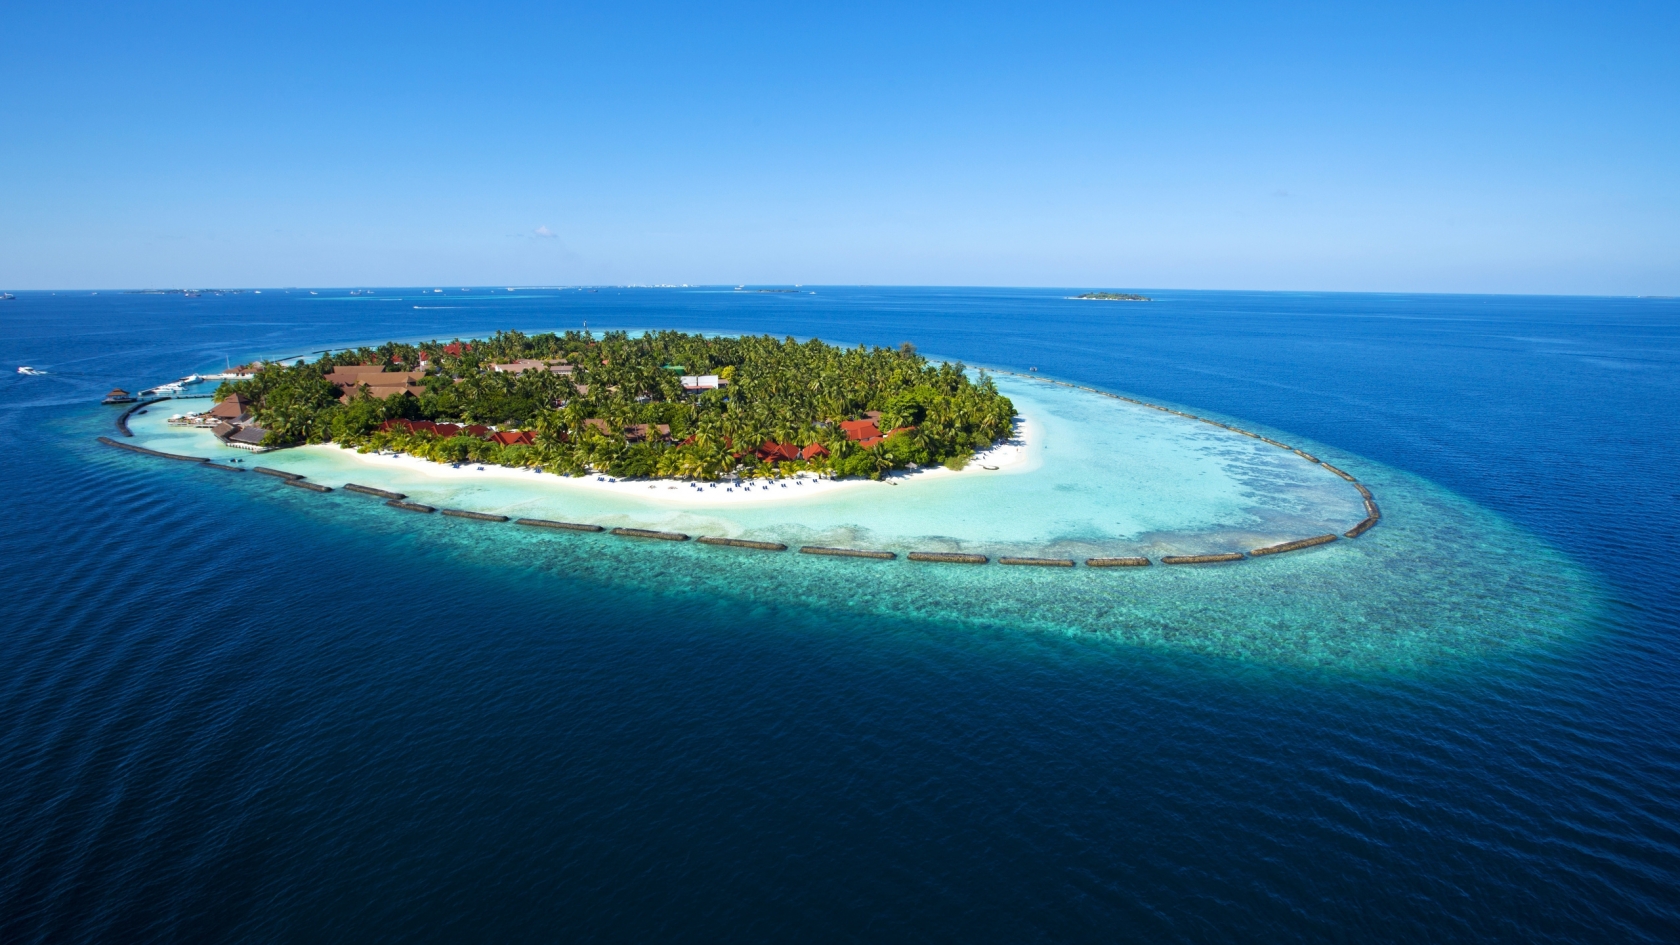 Amazing Maldives Island View for 1680 x 945 HDTV resolution